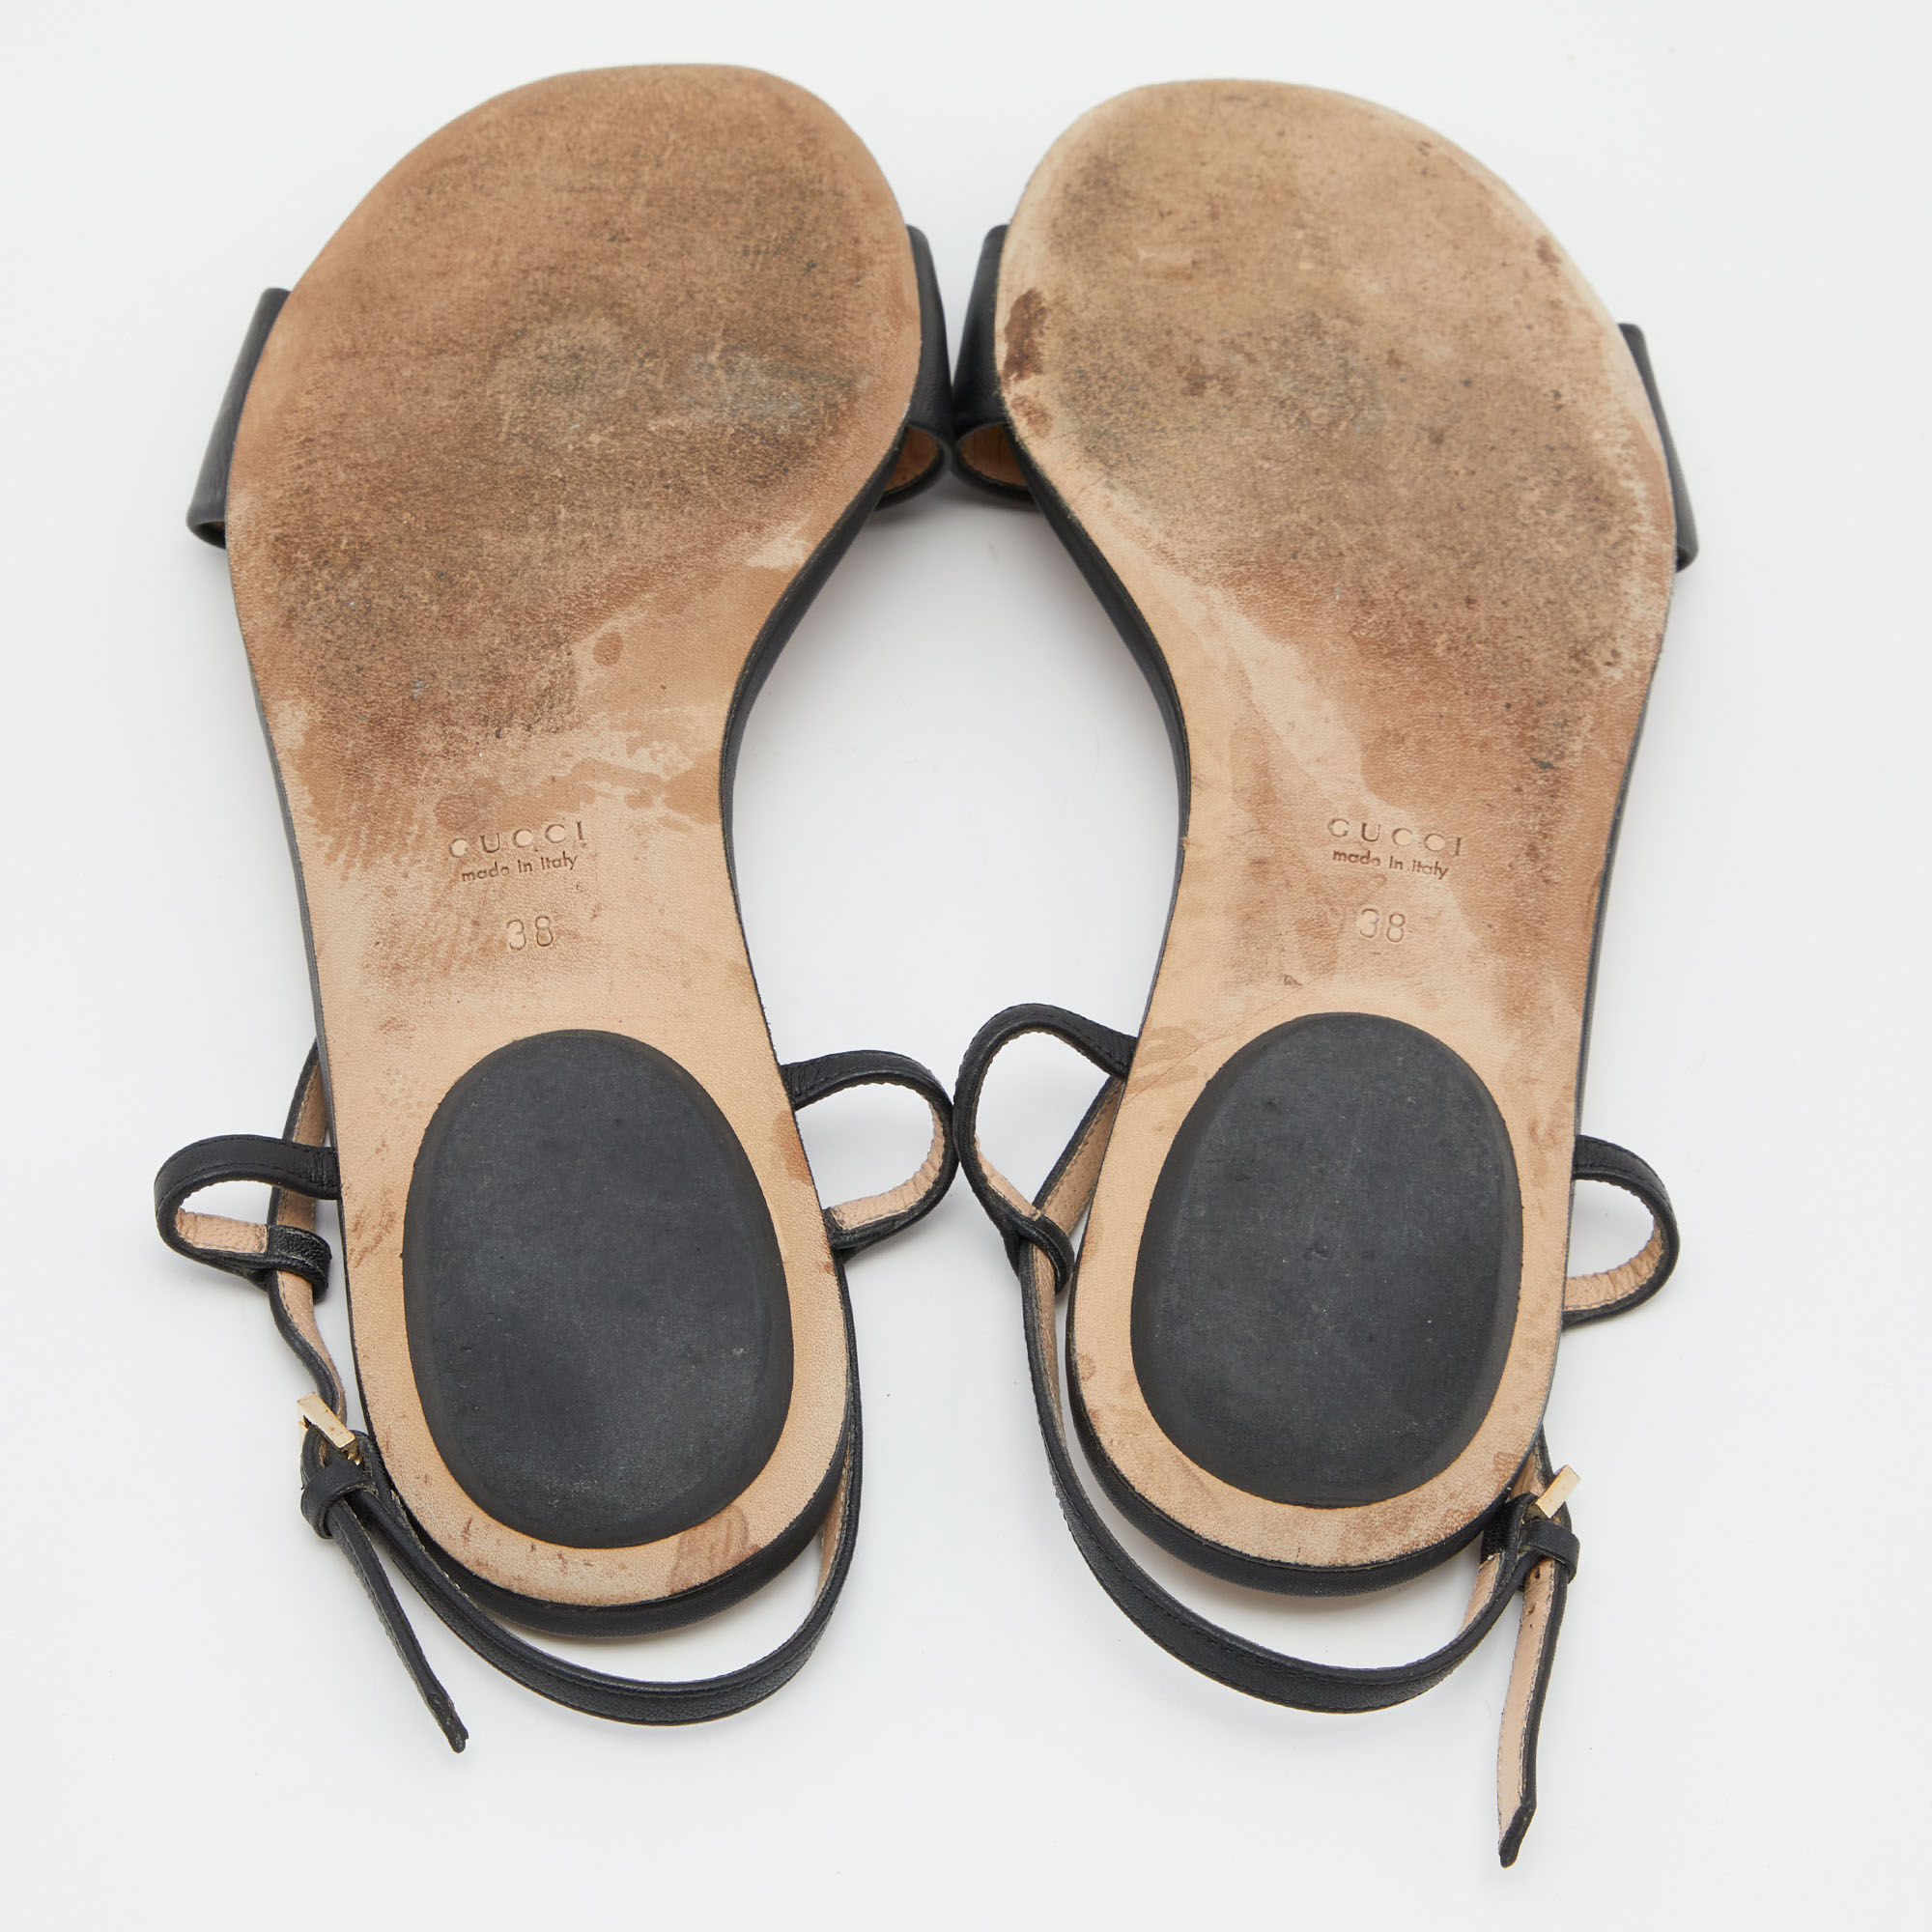 Gucci Black Leather Horsebit T-Strap Flat Sandals Size 38